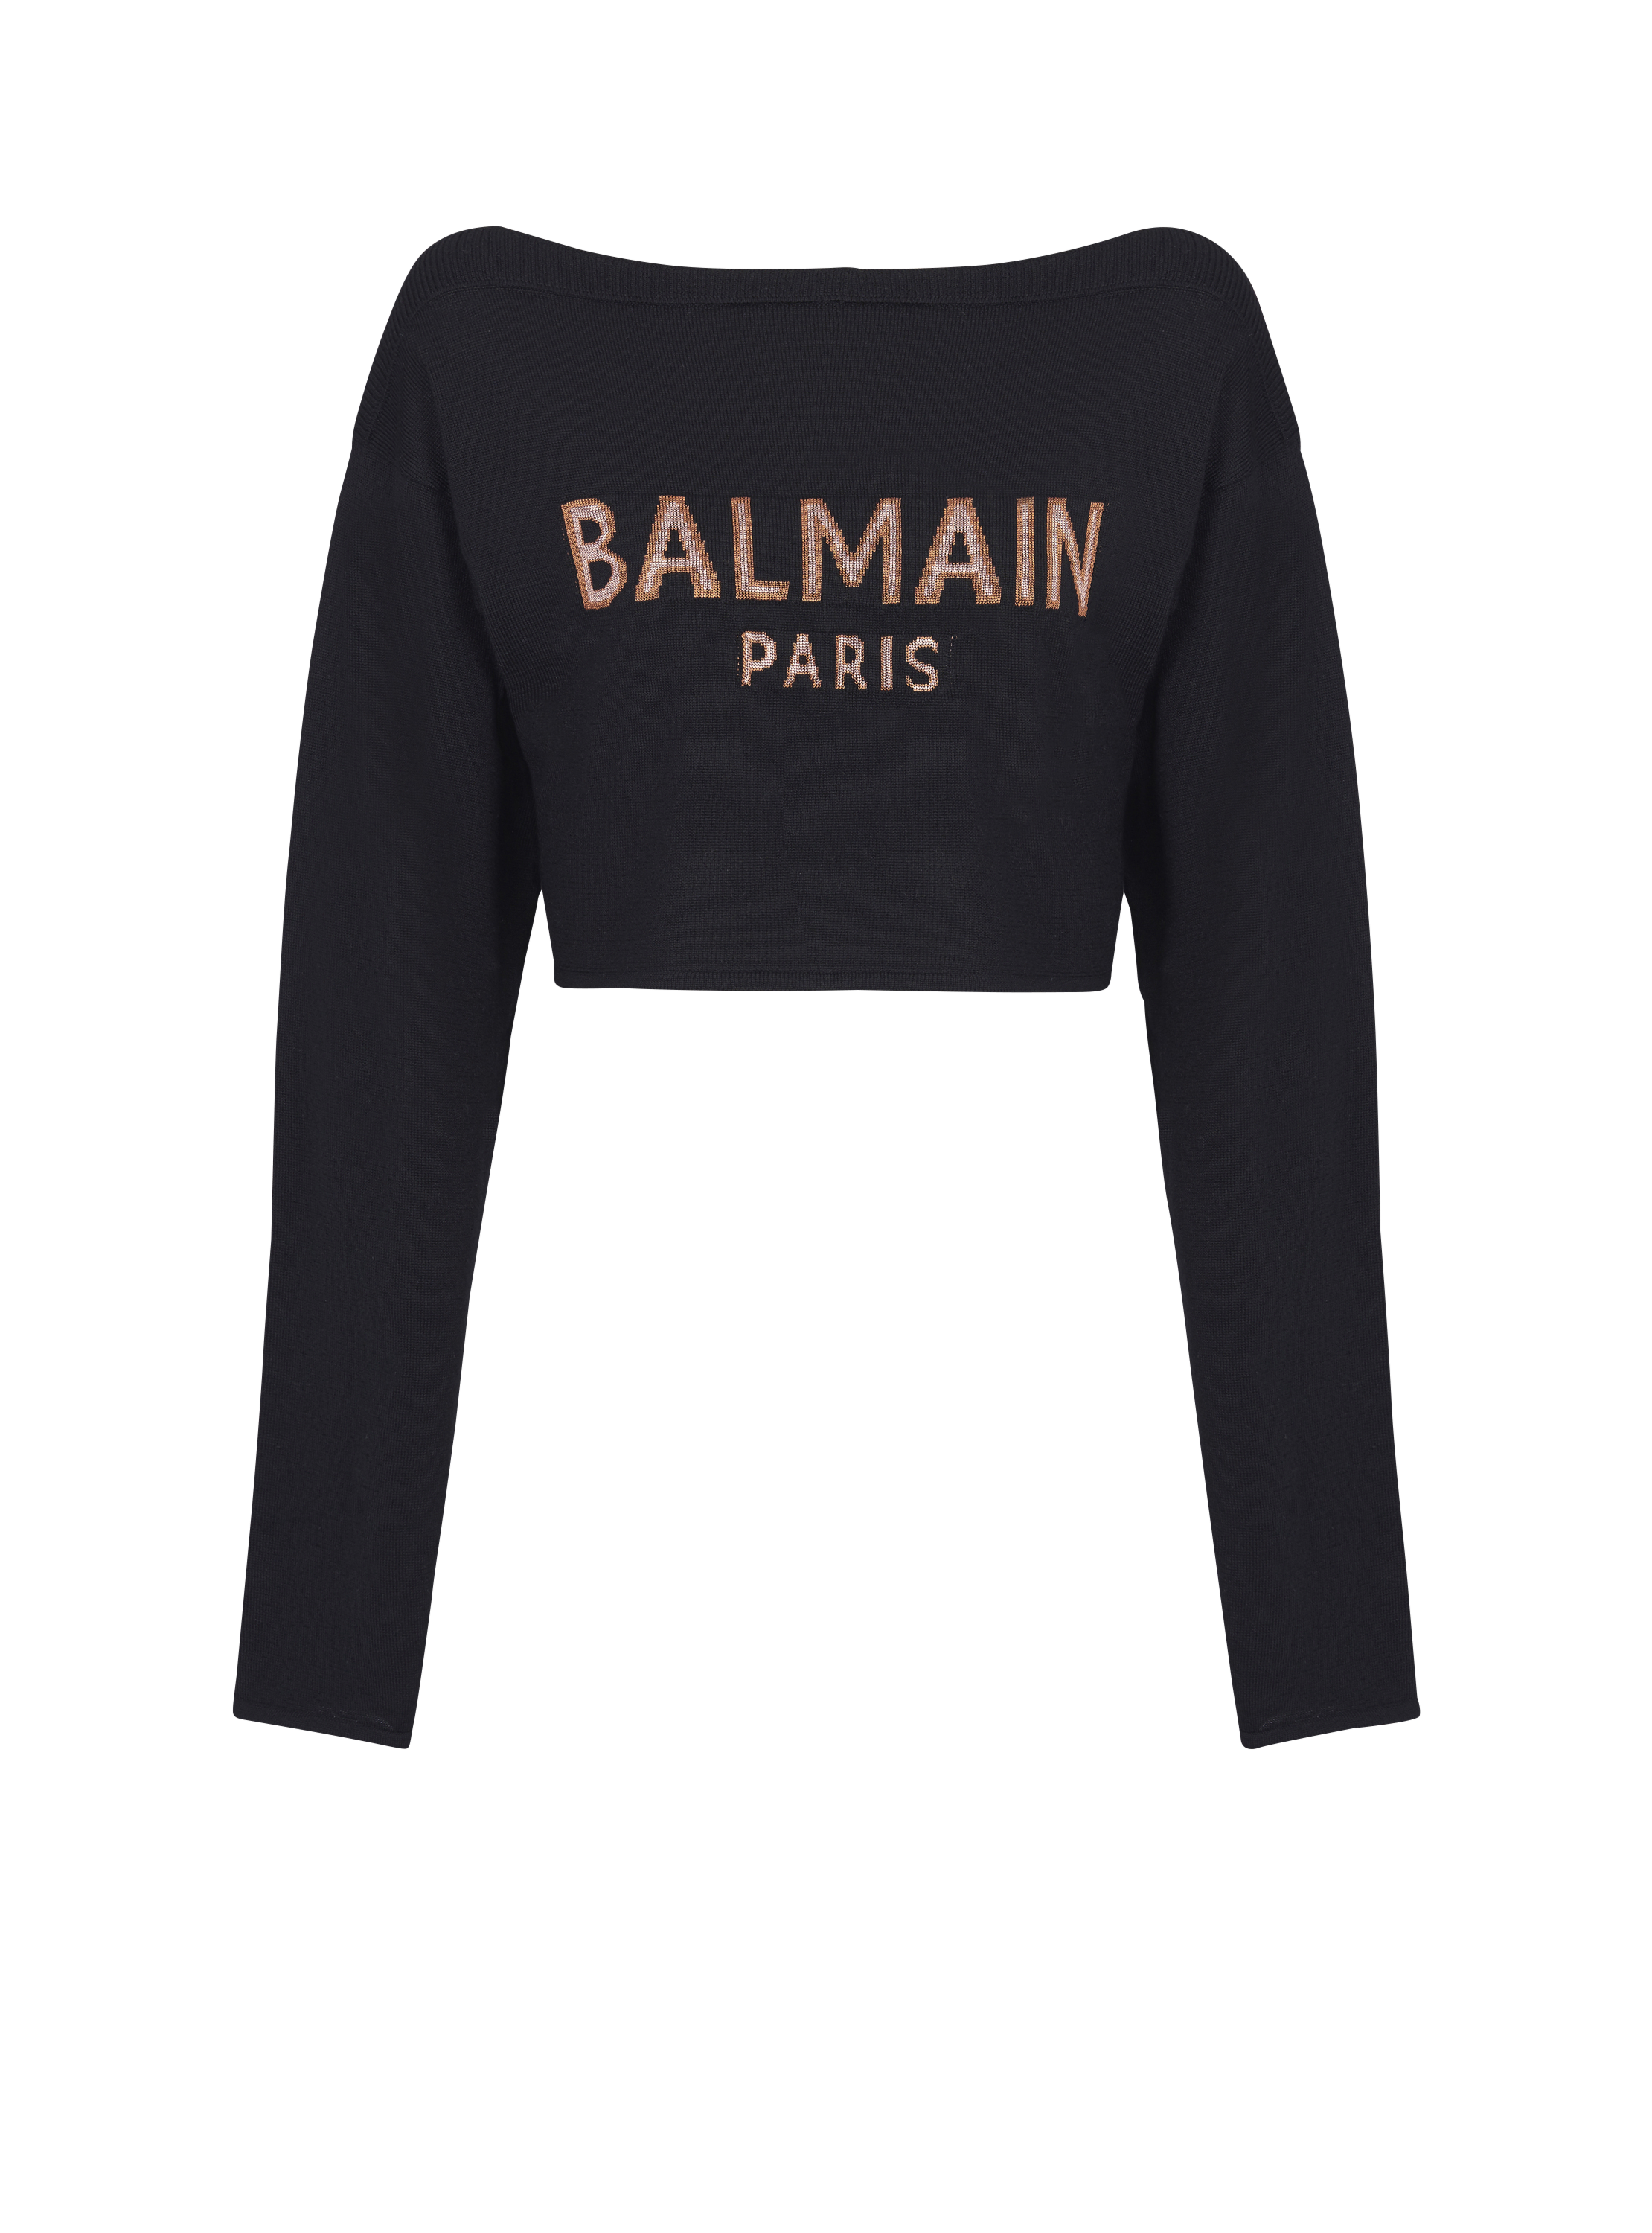 Cropped jacquard jumper with Balmain logo, black, hi-res